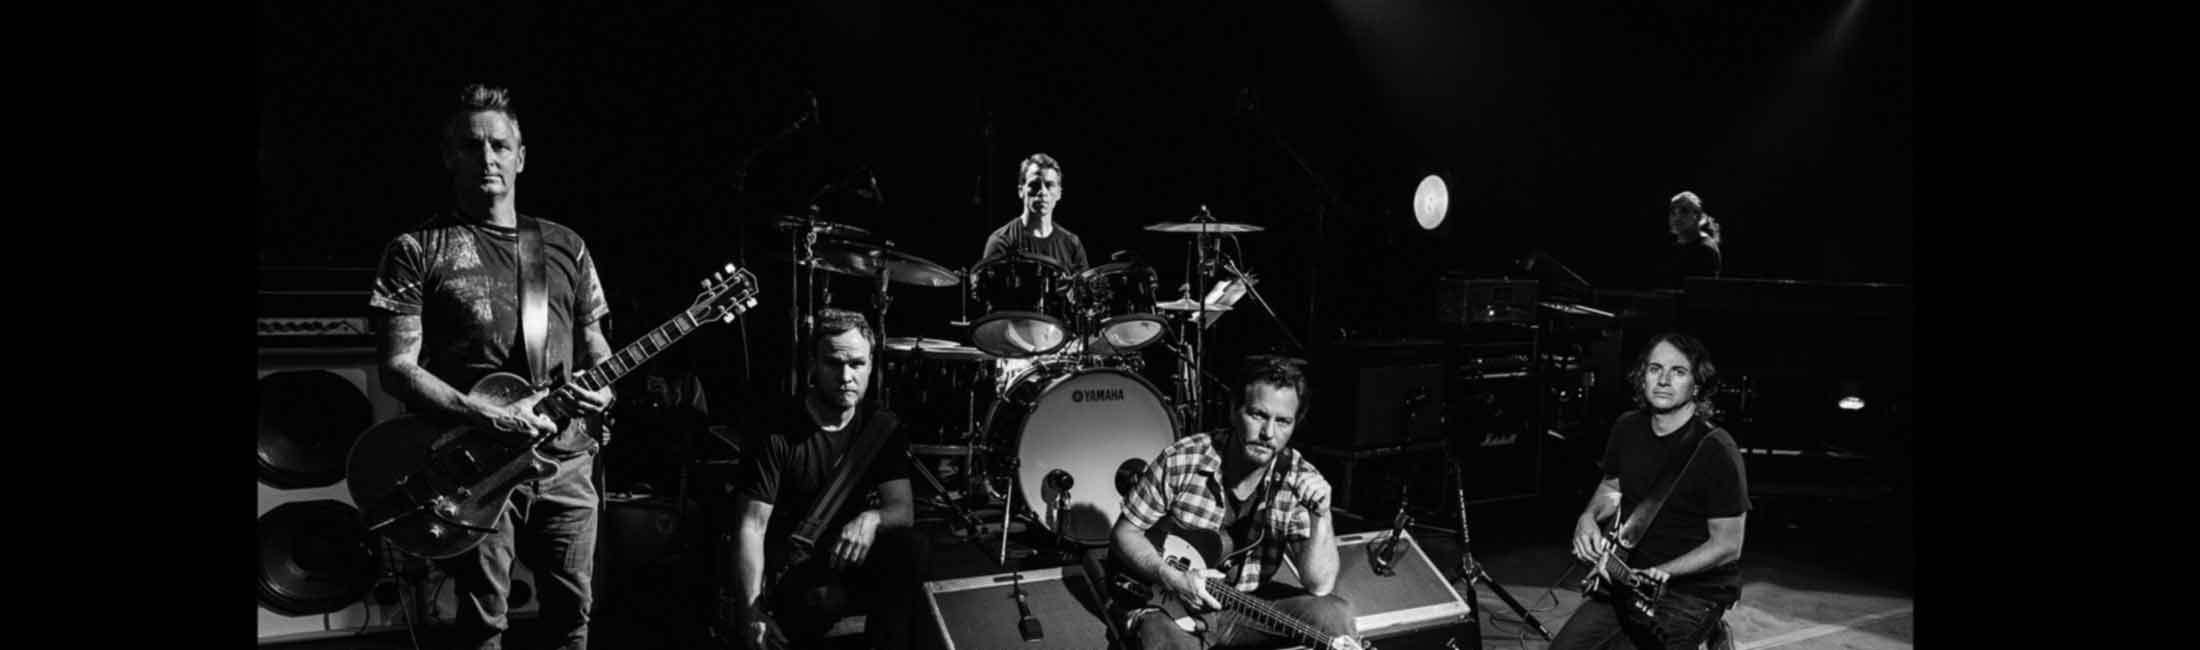 Pearl Jam Announces Concert in Missoula